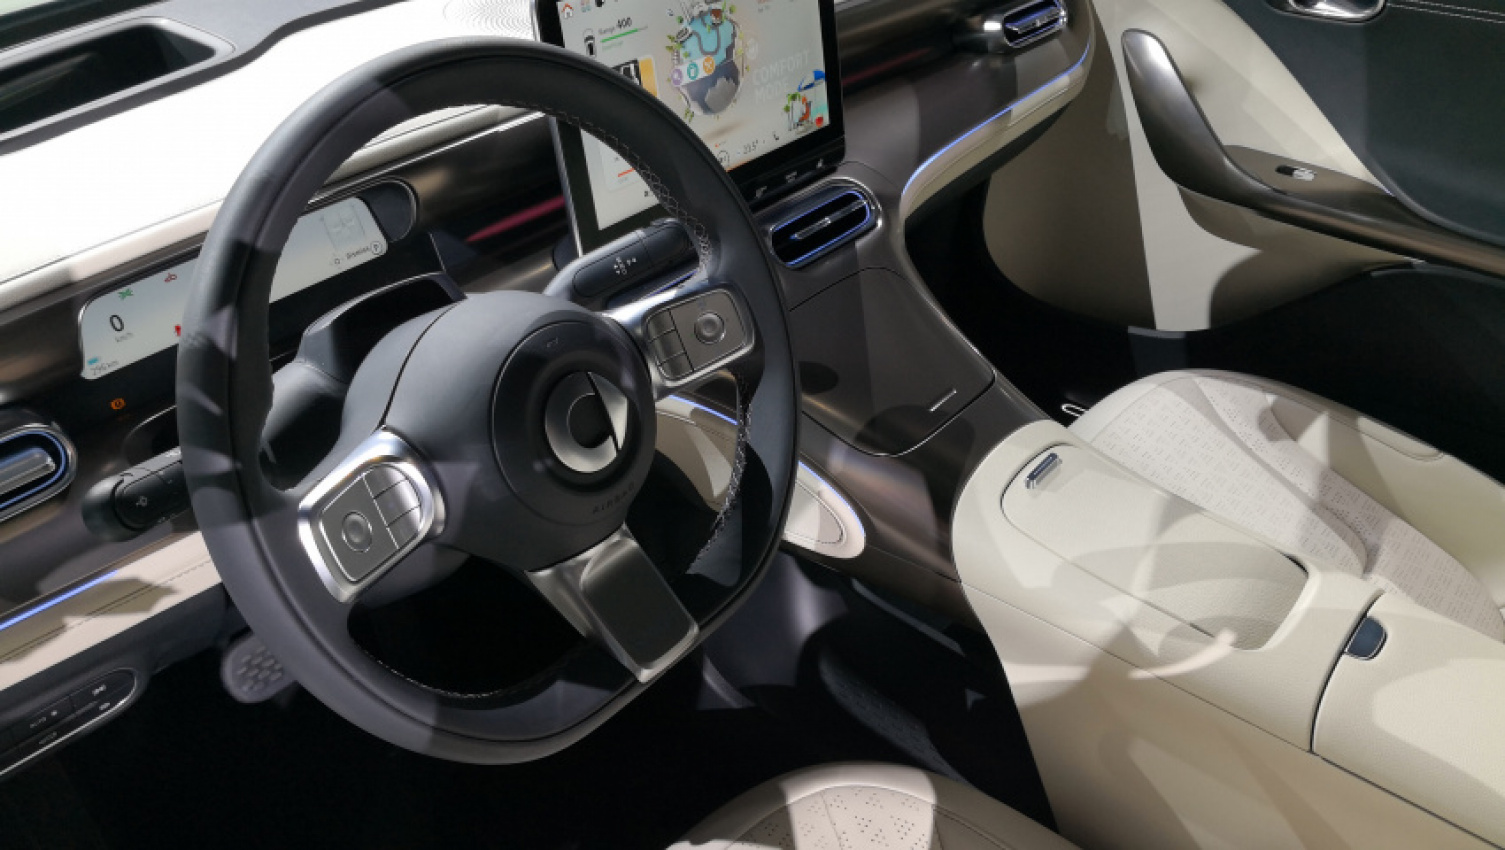 mercedes-benz, news, smart, cars, mercedes, meet smart #1 — mercedes just reinvented the smart car as an electric suv